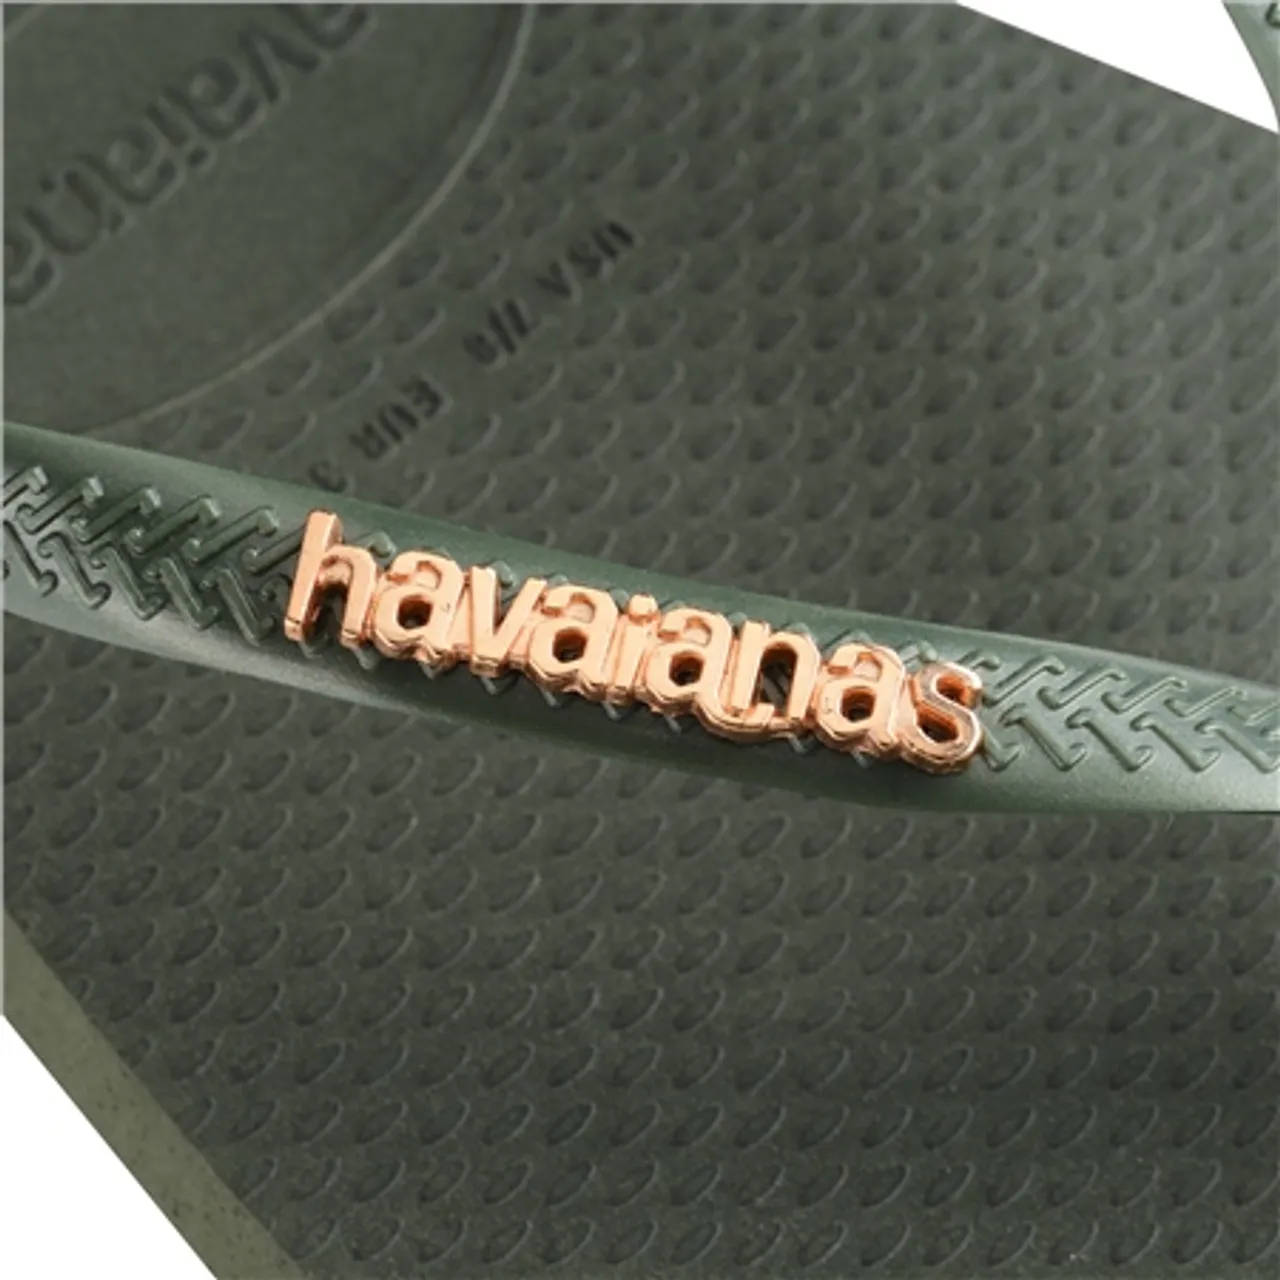 Havaianas Square Logo Metallic Flip Flops - Green Olive - UK 5 (EU 37/38)